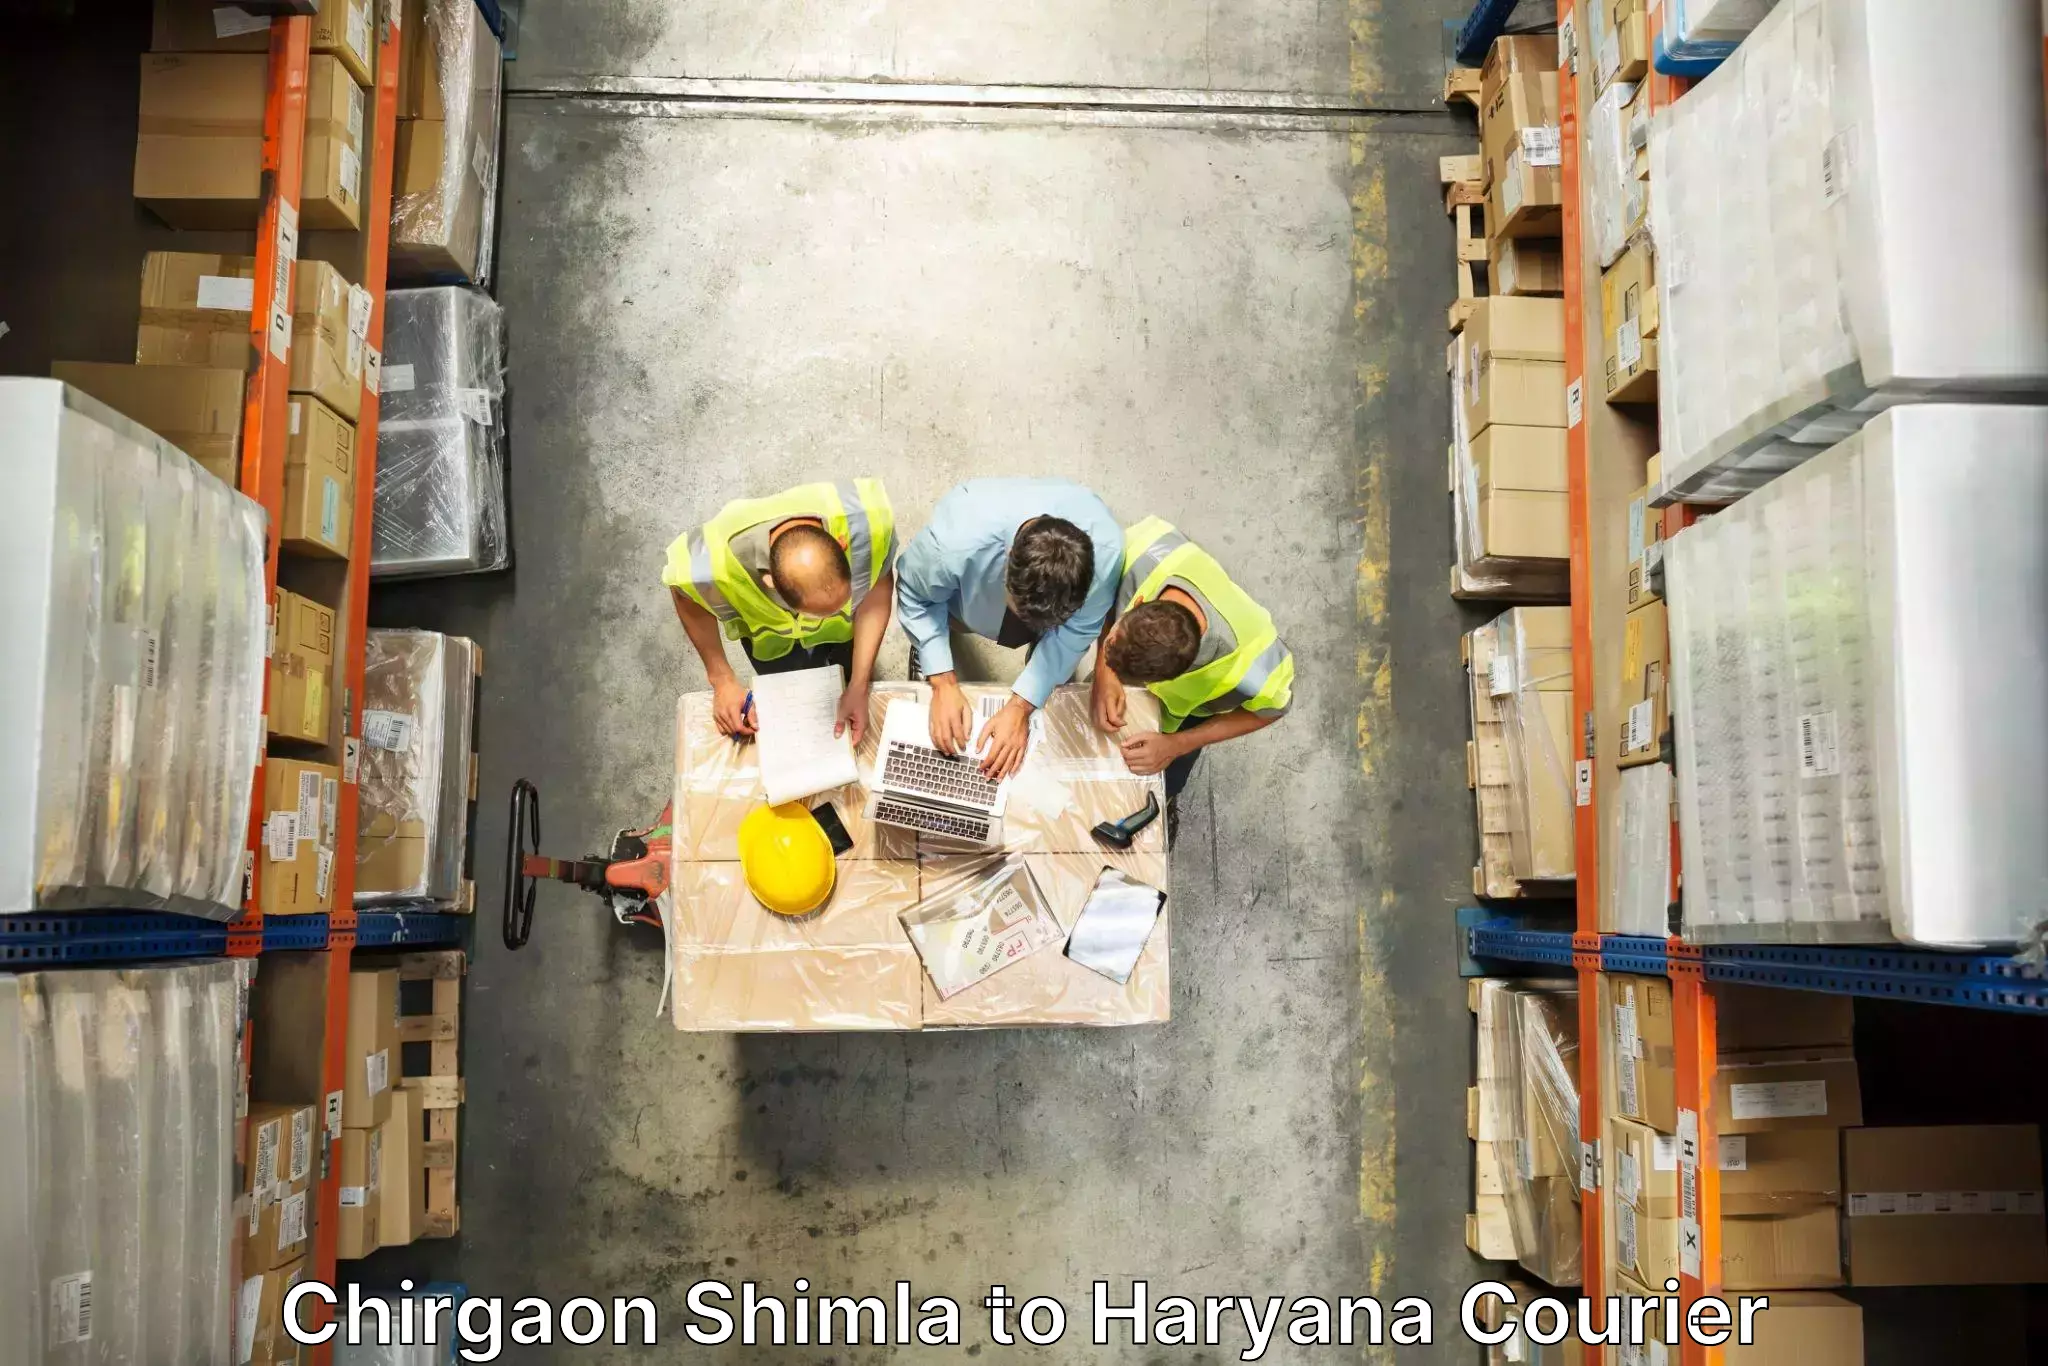 Quality moving company Chirgaon Shimla to Sirsa